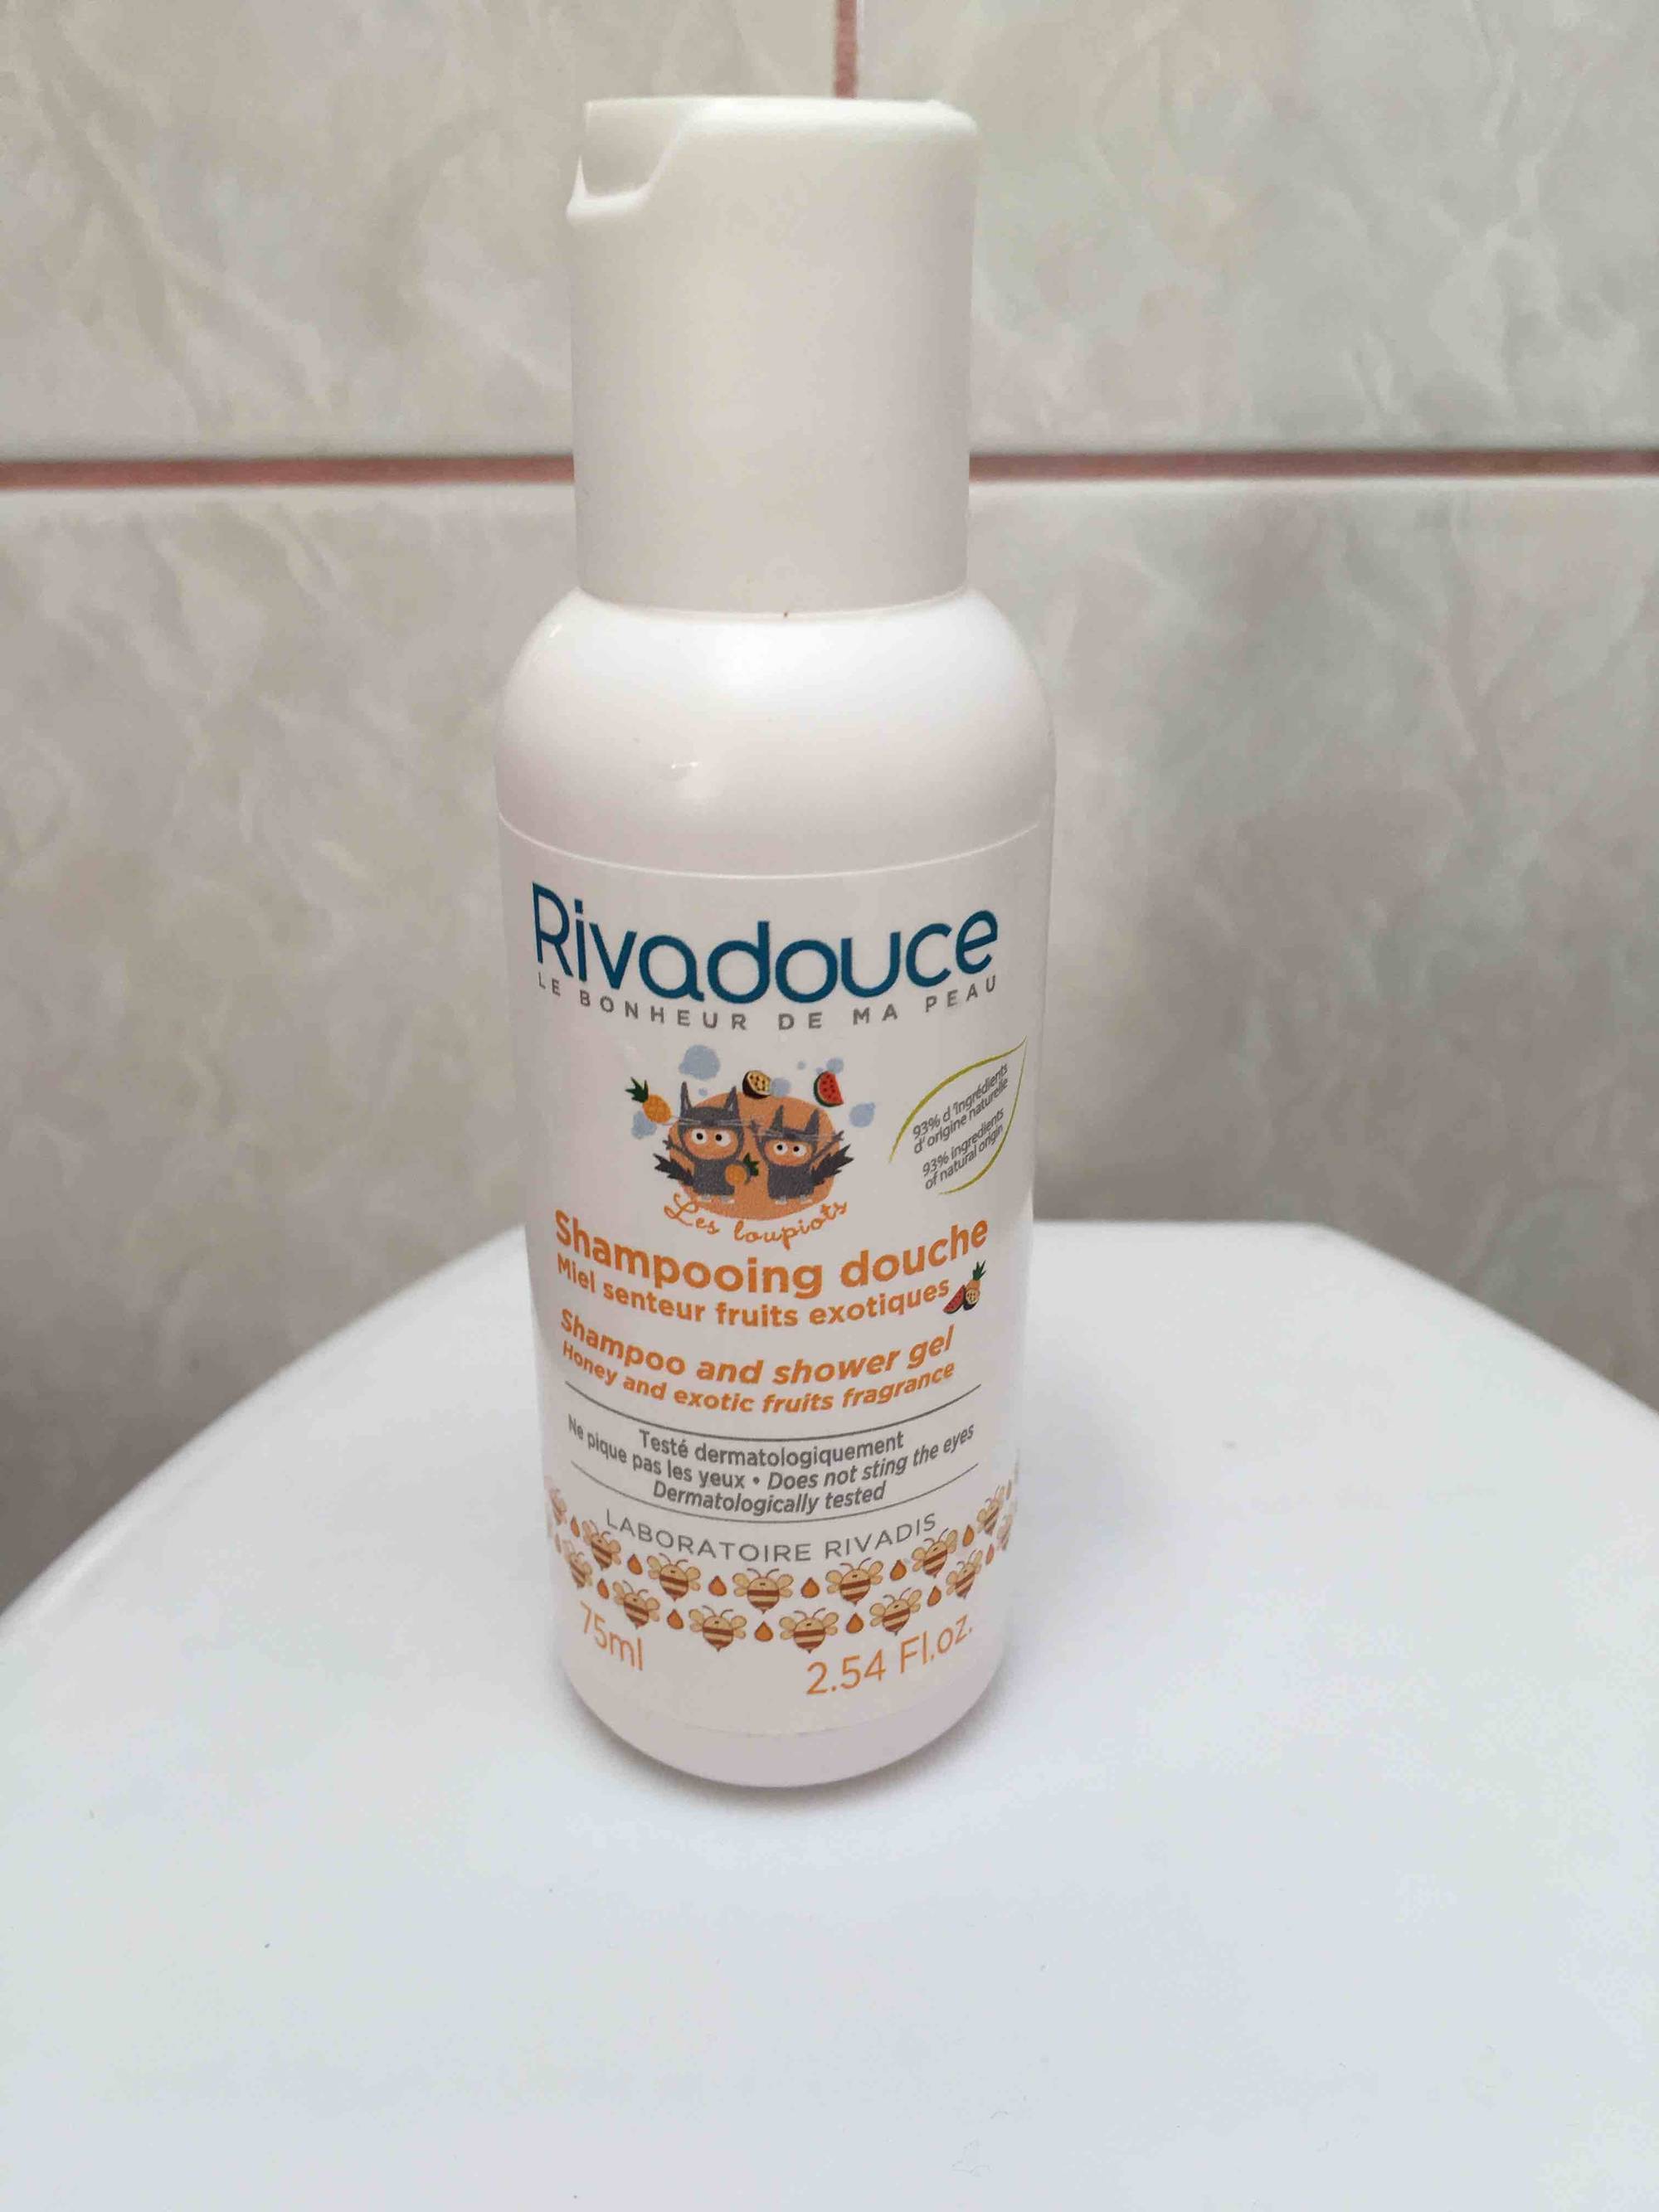 RIVADOUCE - Les loupiots - Shampooing douche